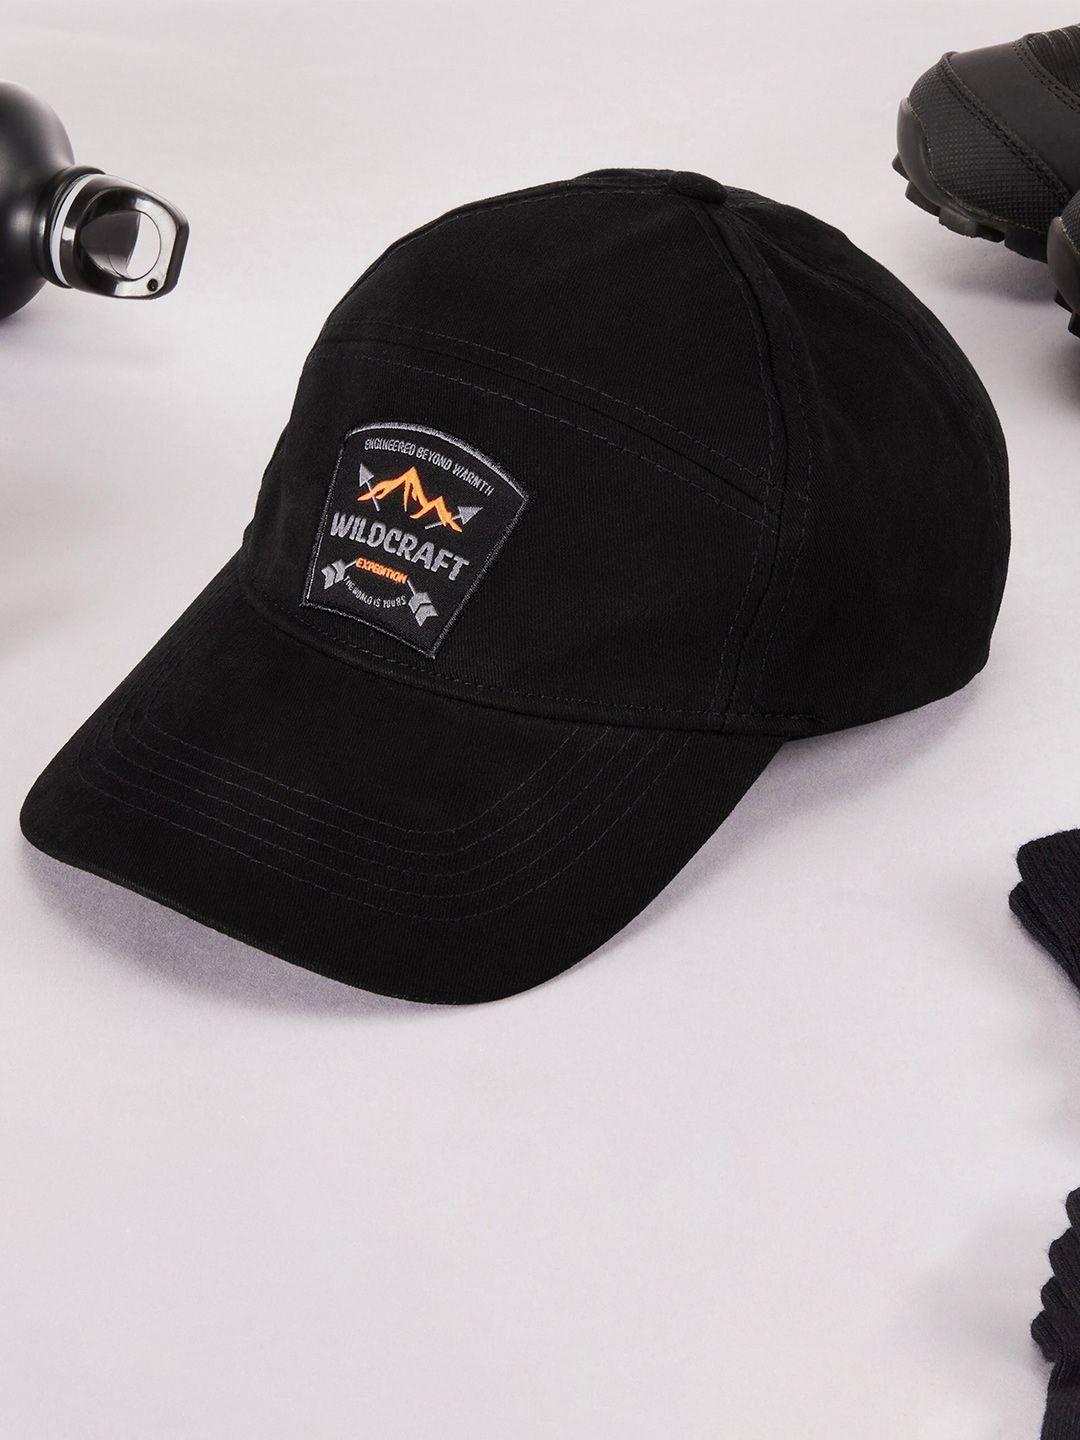 wildcraft adults black & grey brand logo embroidered cotton baseball cap